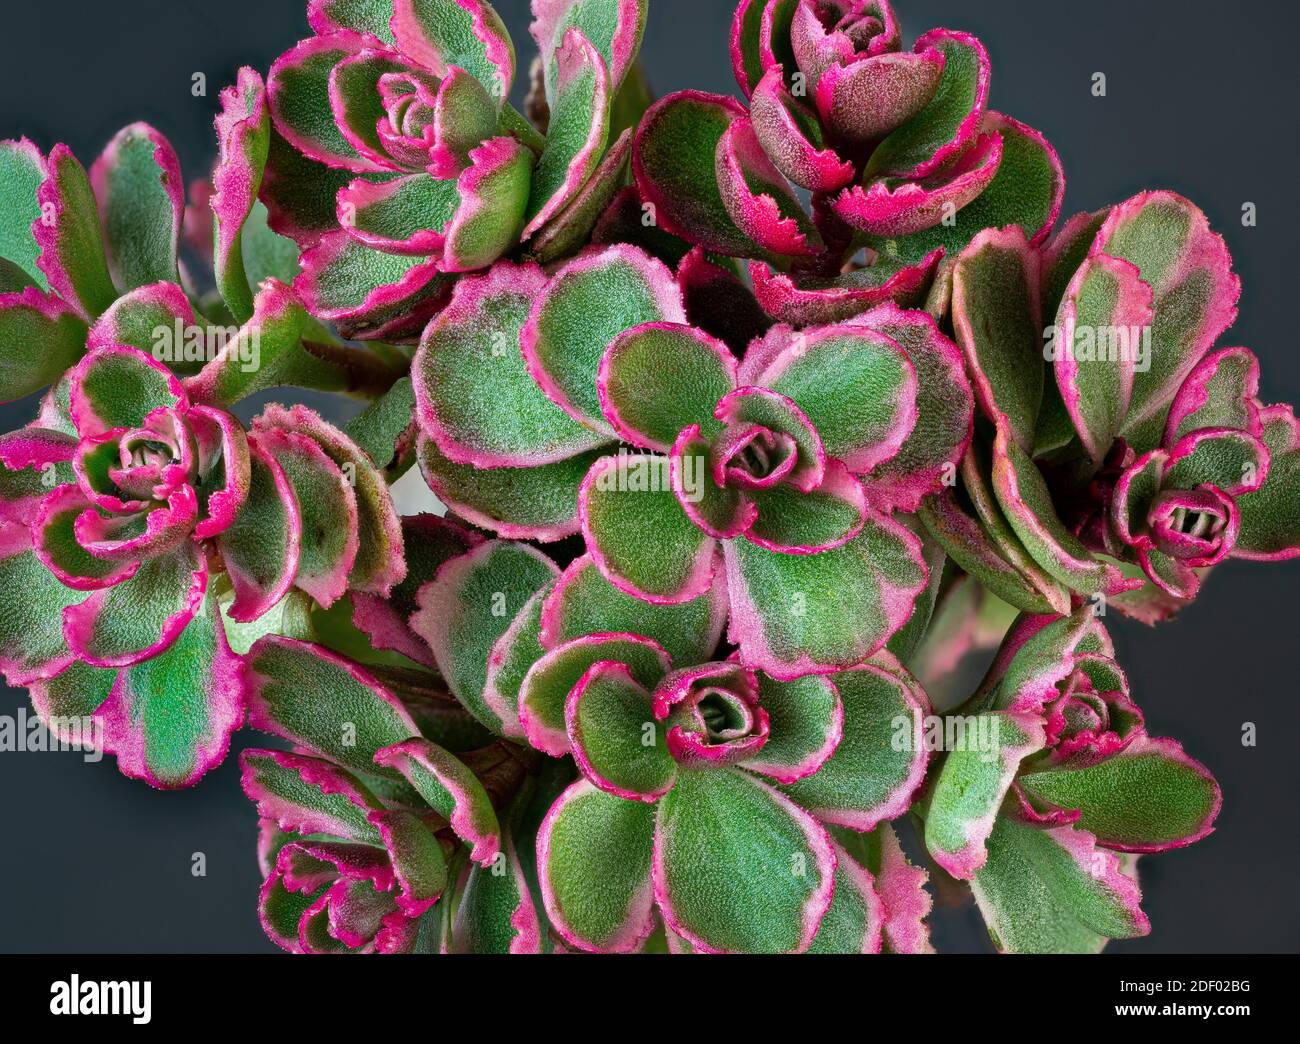 Close-up view of small bouquet of tricolor sedum (Sedum spurium). Stock Photo